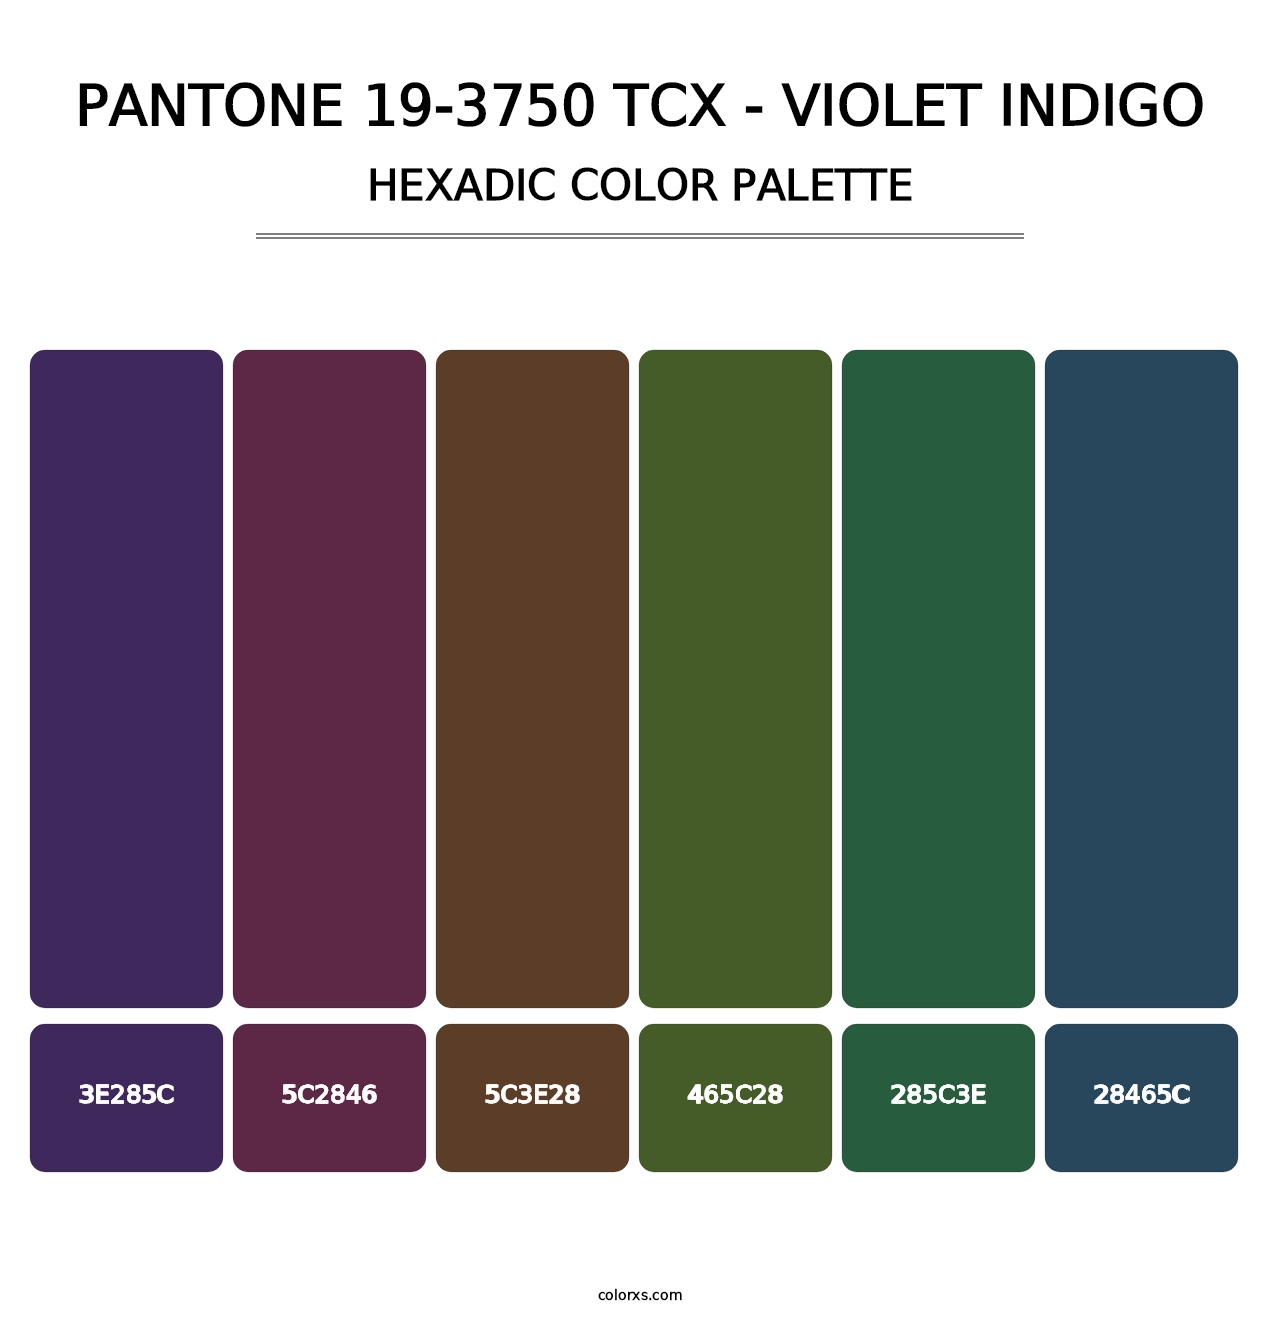 PANTONE 19-3750 TCX - Violet Indigo - Hexadic Color Palette